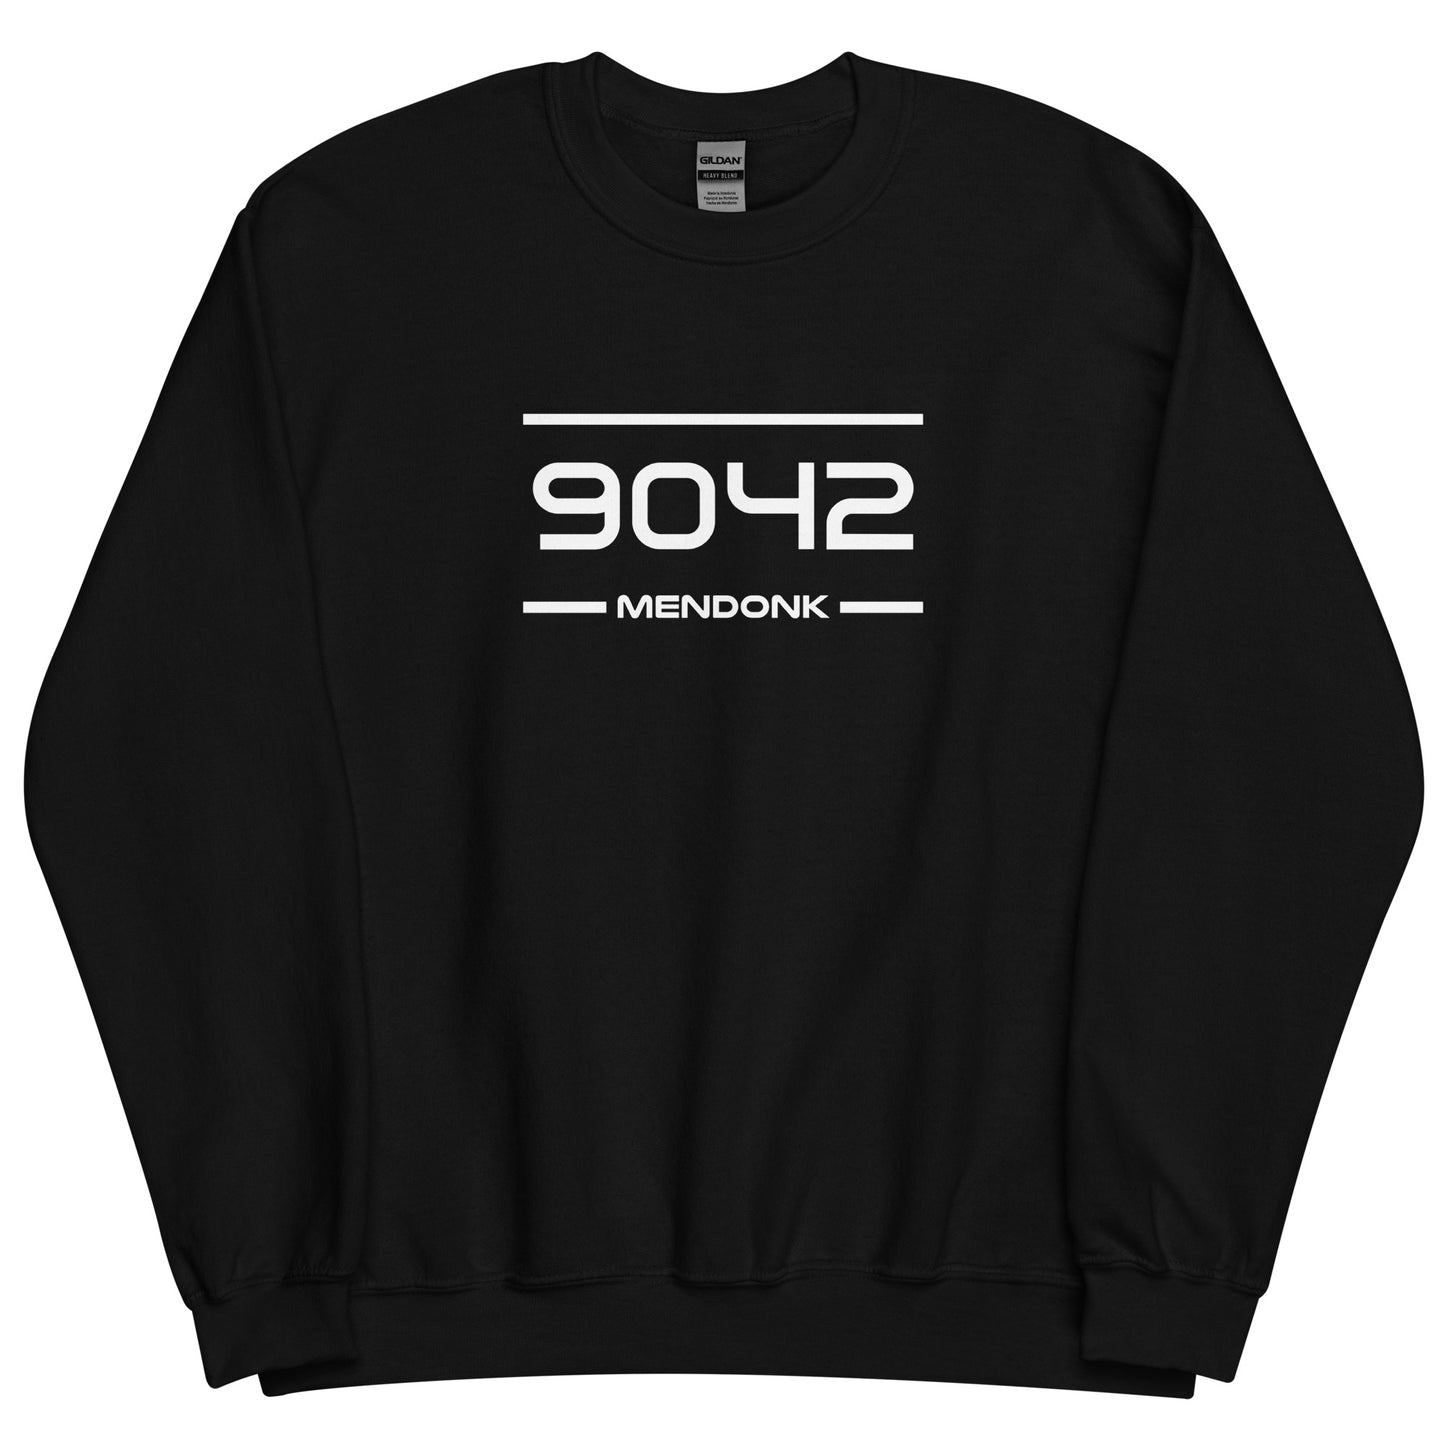 Sweater - 9042 - Mendonk (M/V)